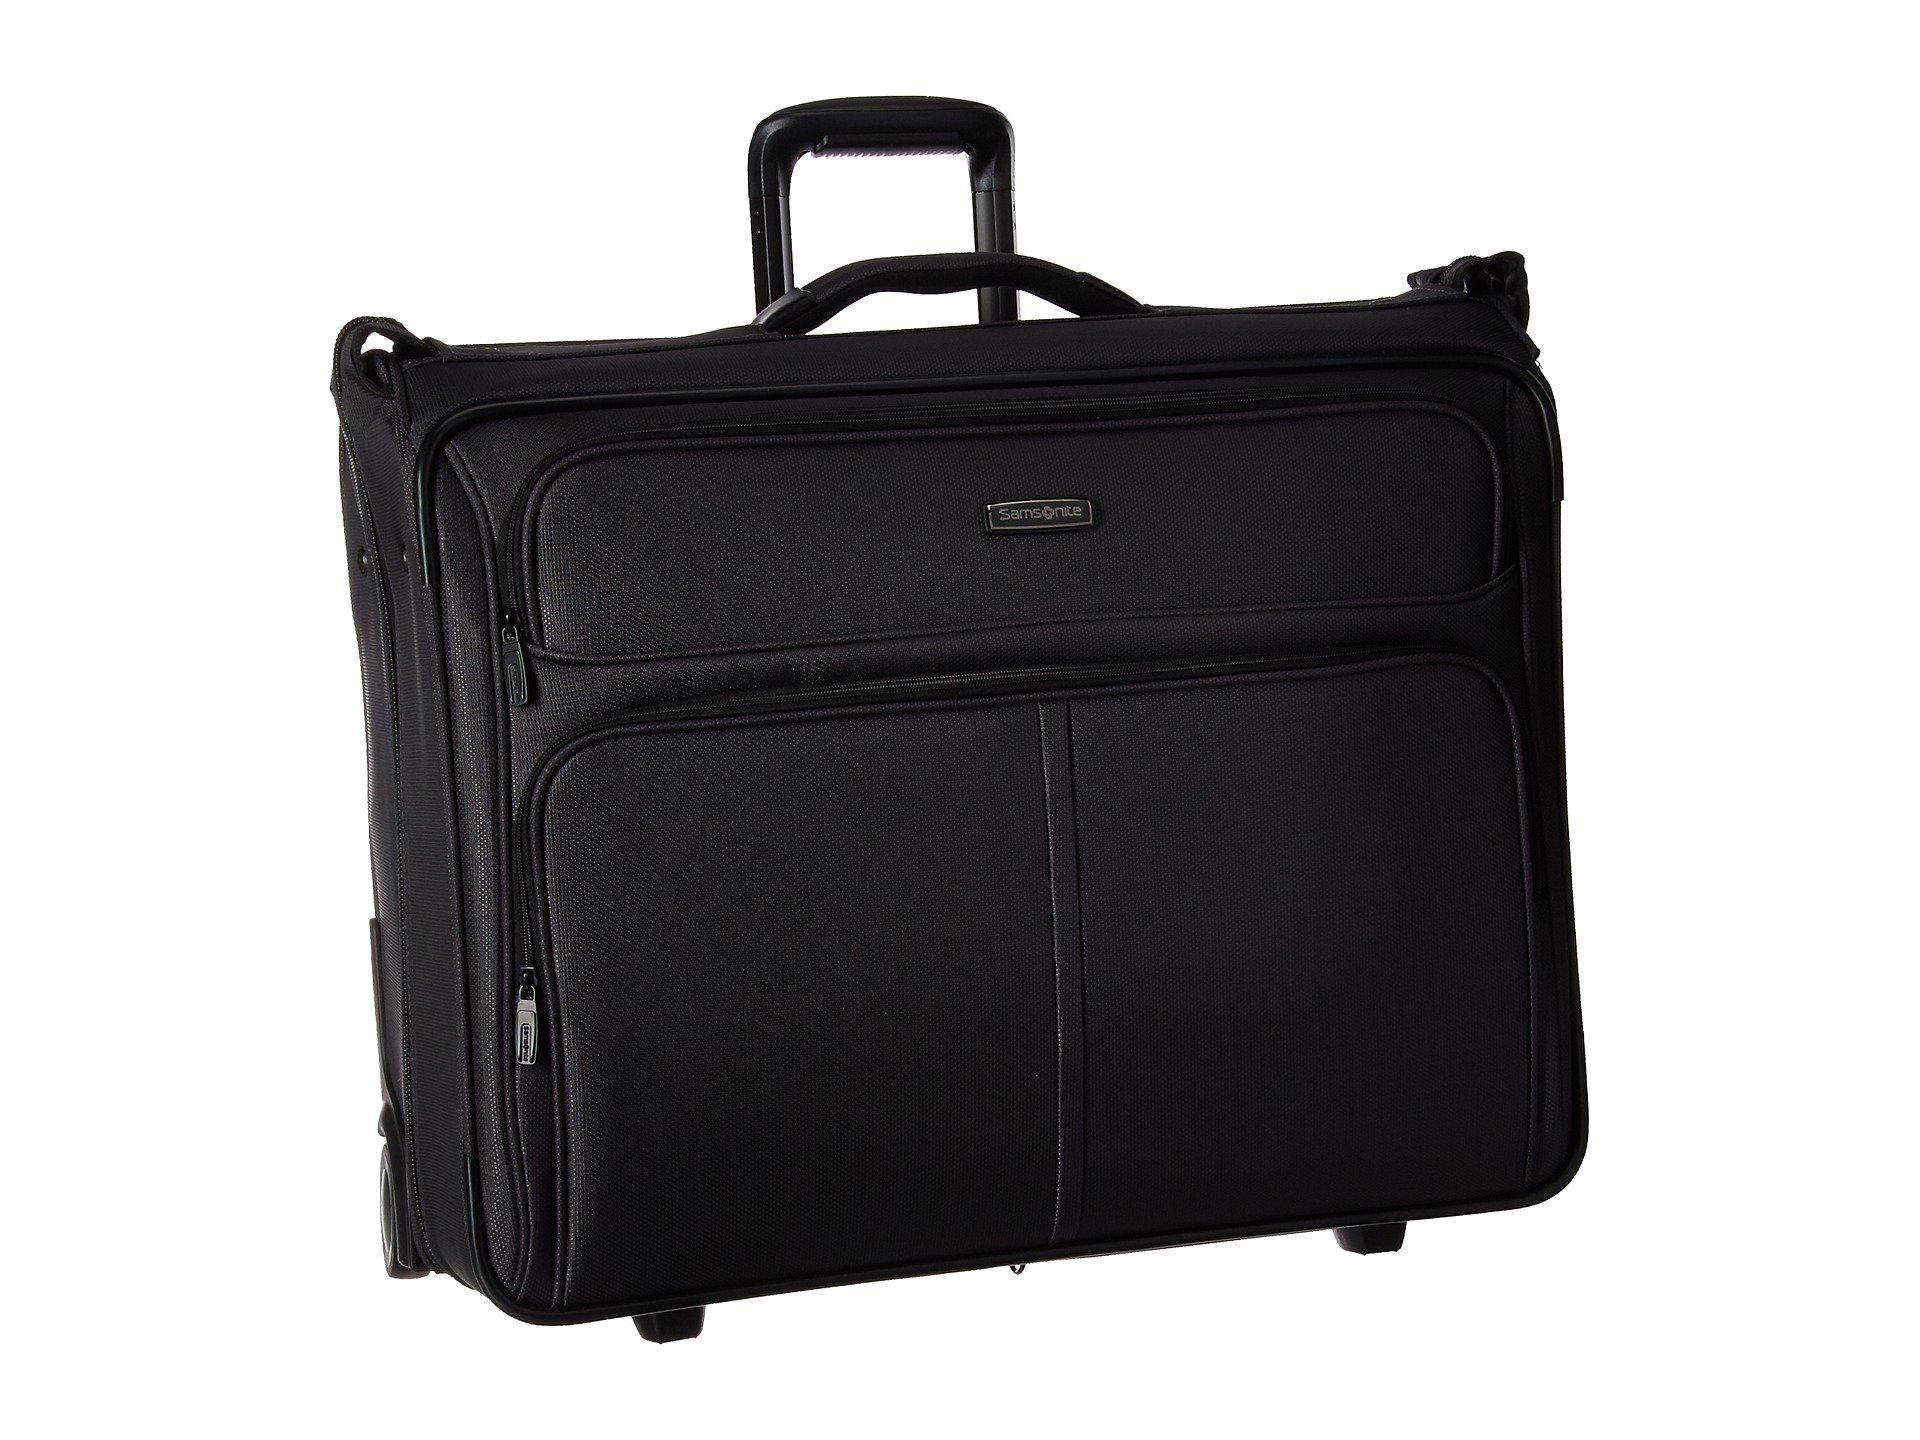 Samsonite Leverage Lte Wheeled Garment Bag (charcoal) Luggage in Black for Men - Lyst